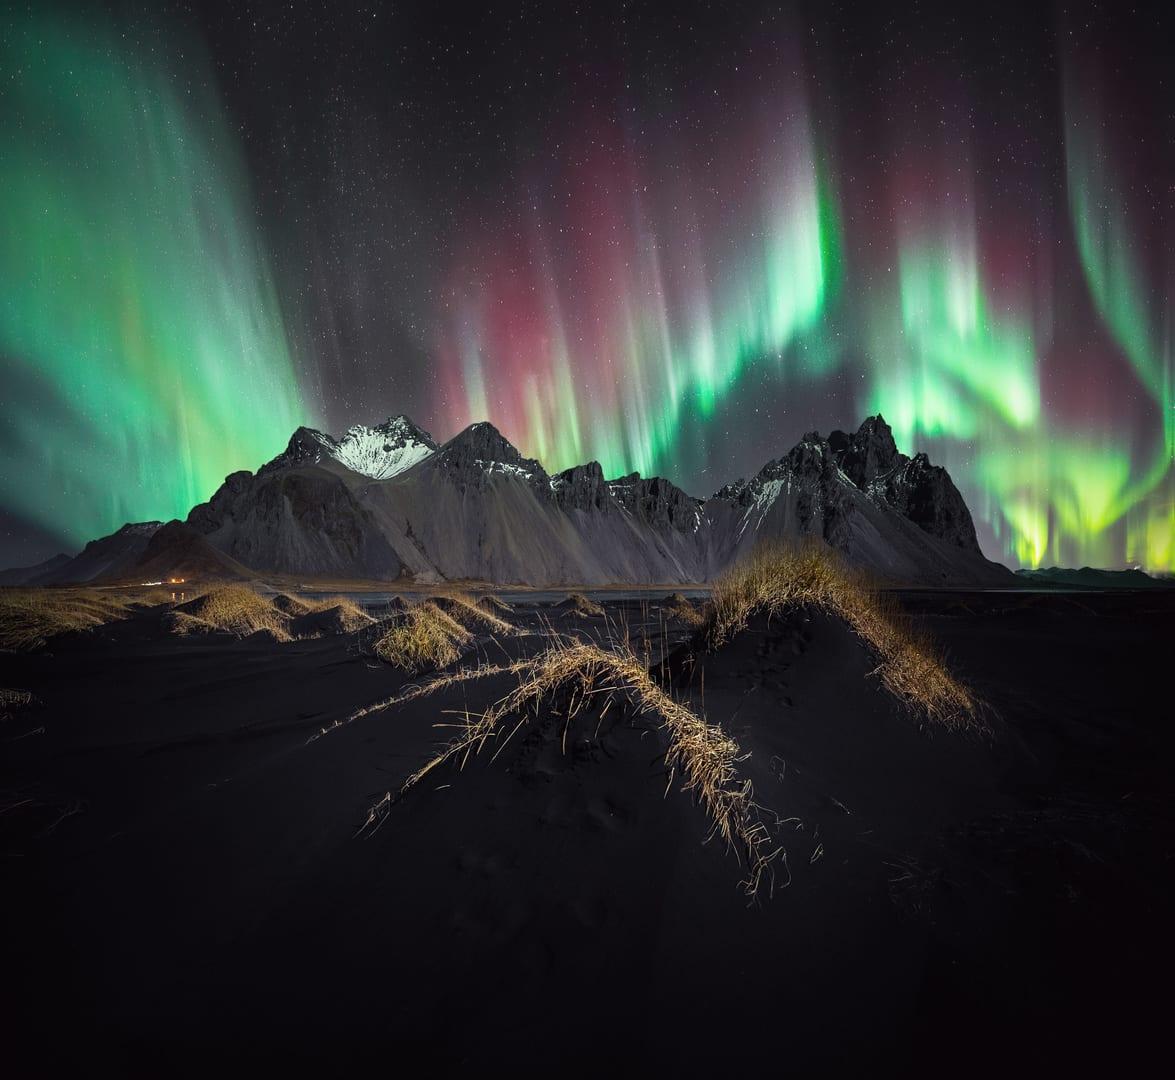 “Spectrum” by Stefan Liebermann, Vestrahorn, Iceland. (Courtesy of Stefan Liebermann via <a href="https://capturetheatlas.com/">Capture the Atlas</a>)